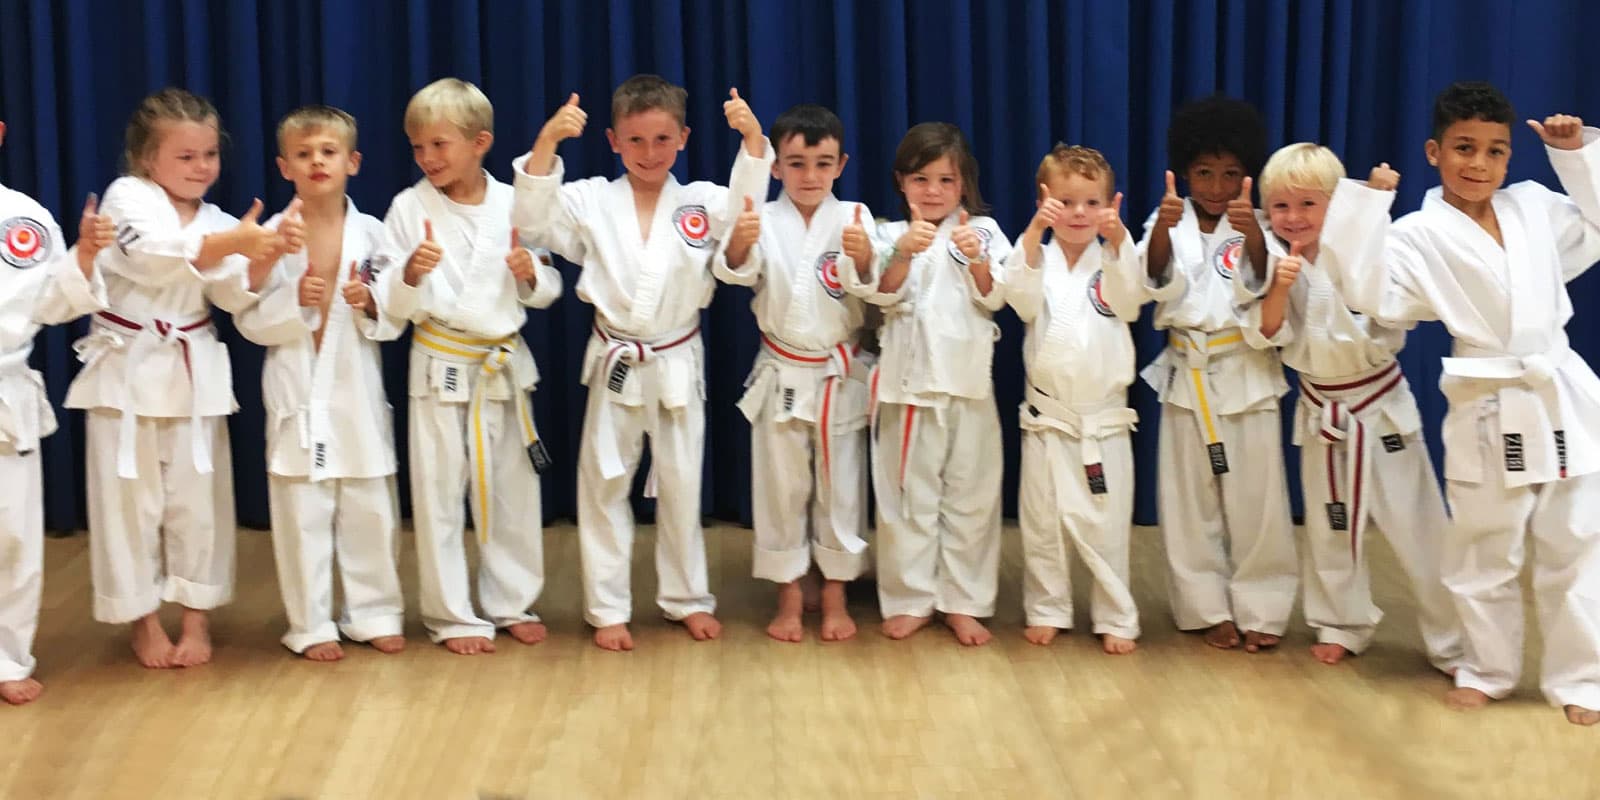 The Emma Harris School of Karate